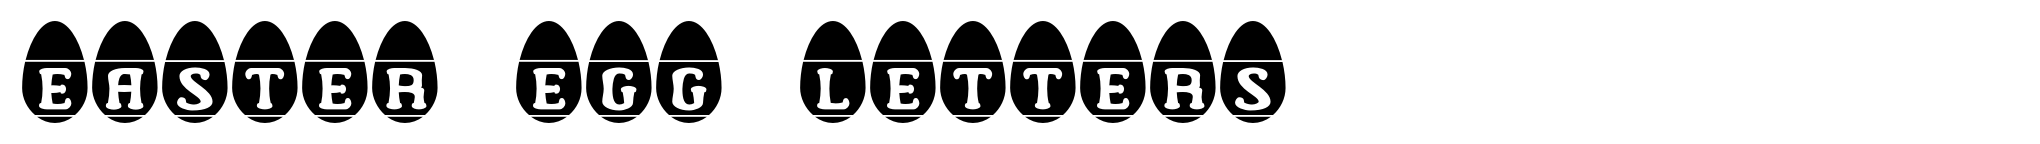 Easter Egg Letters image